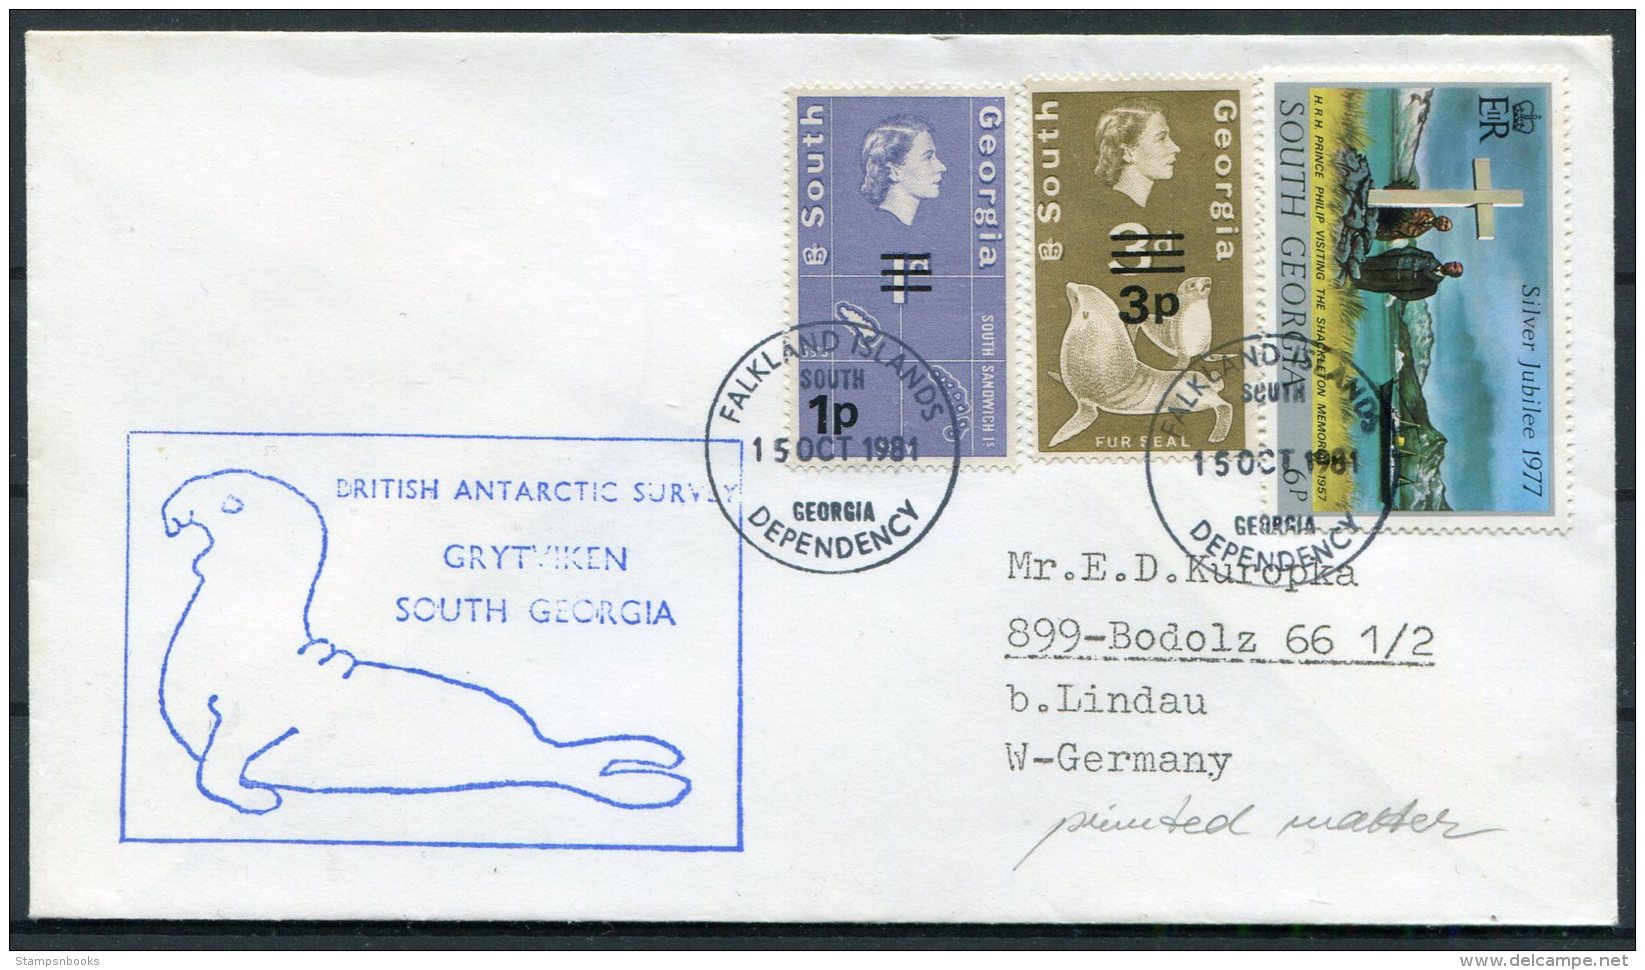 1981 South Georgia. F.I.D. British Antarctic Survey Grytviken Seal Cover - South Georgia